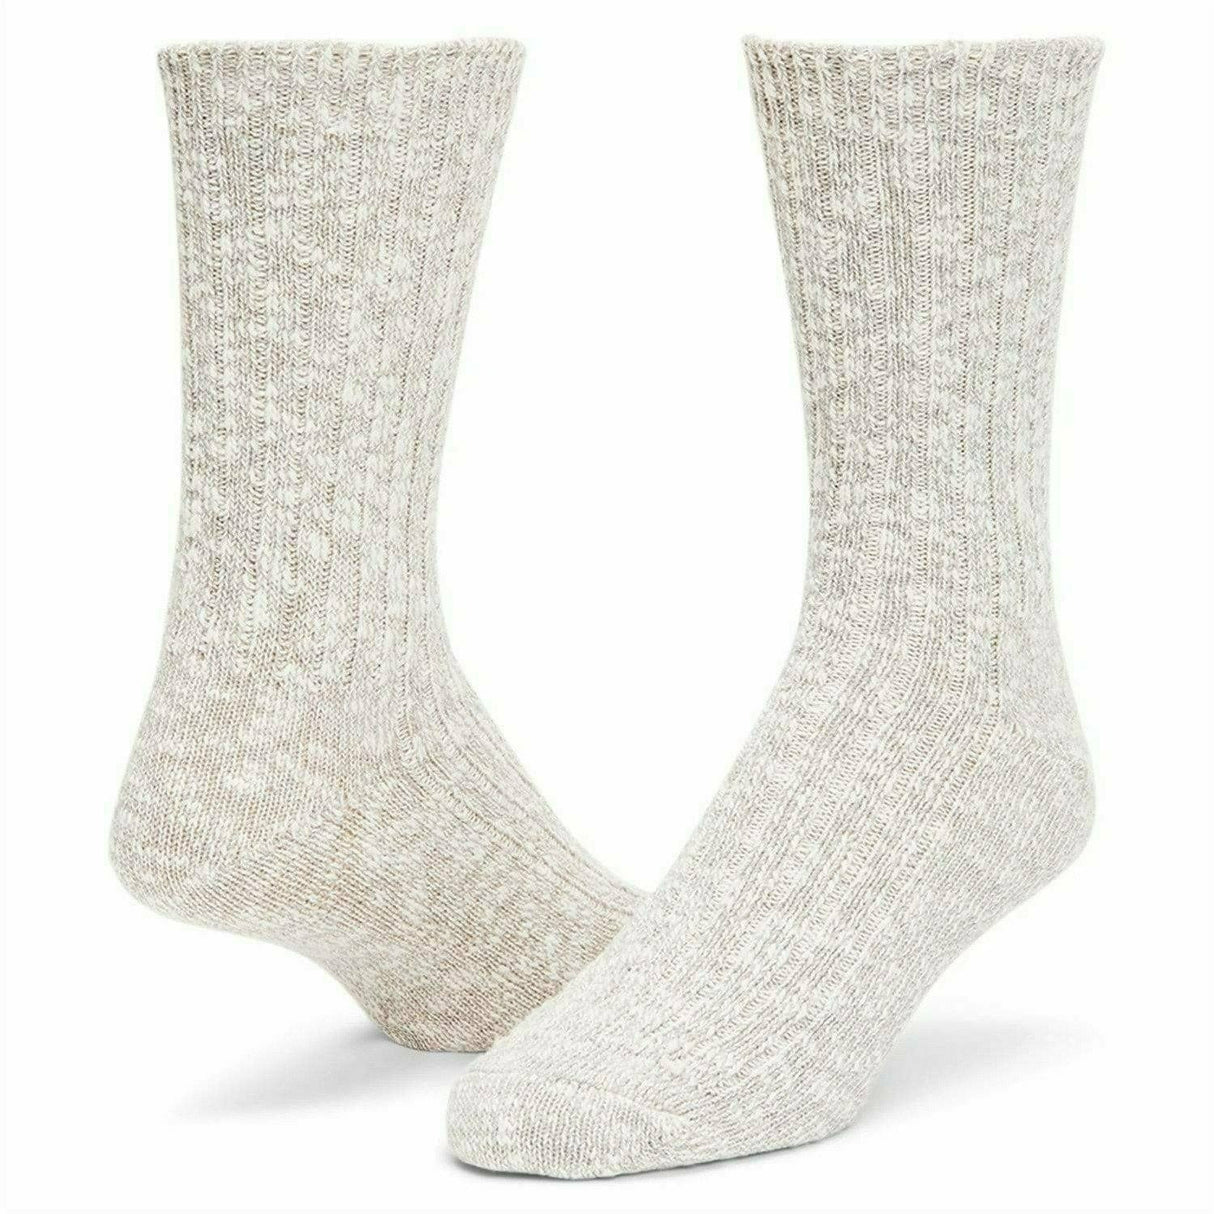 Wigwam Cypress Socks  -  Medium / White/Gray